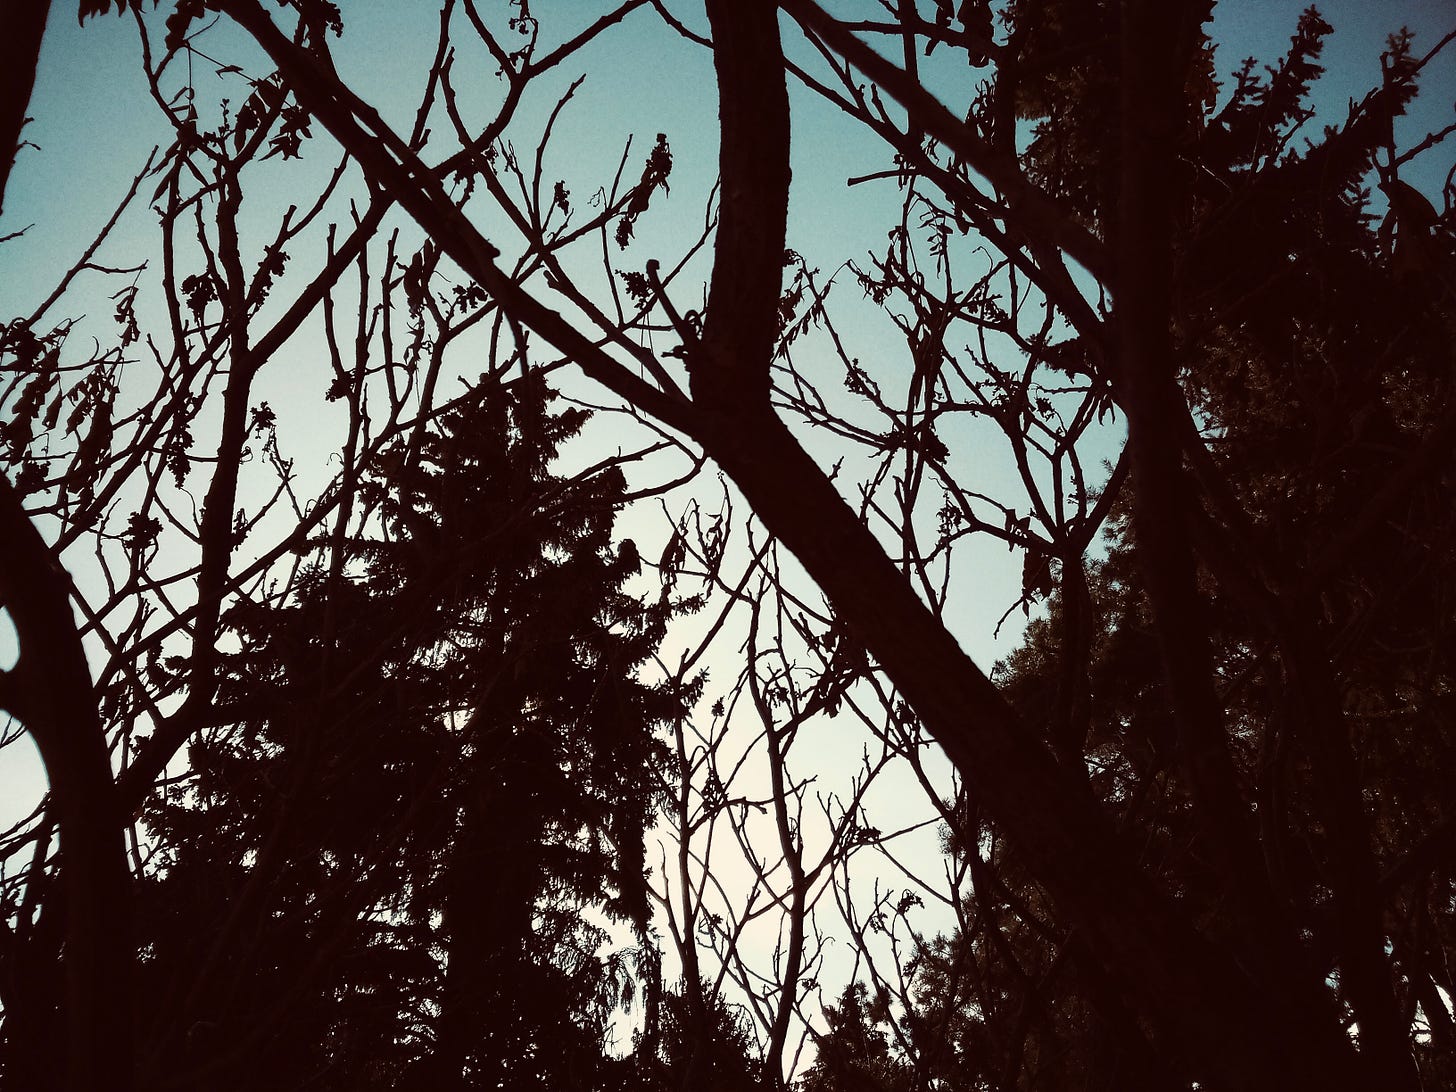 Dark bare branches against bright blue sky